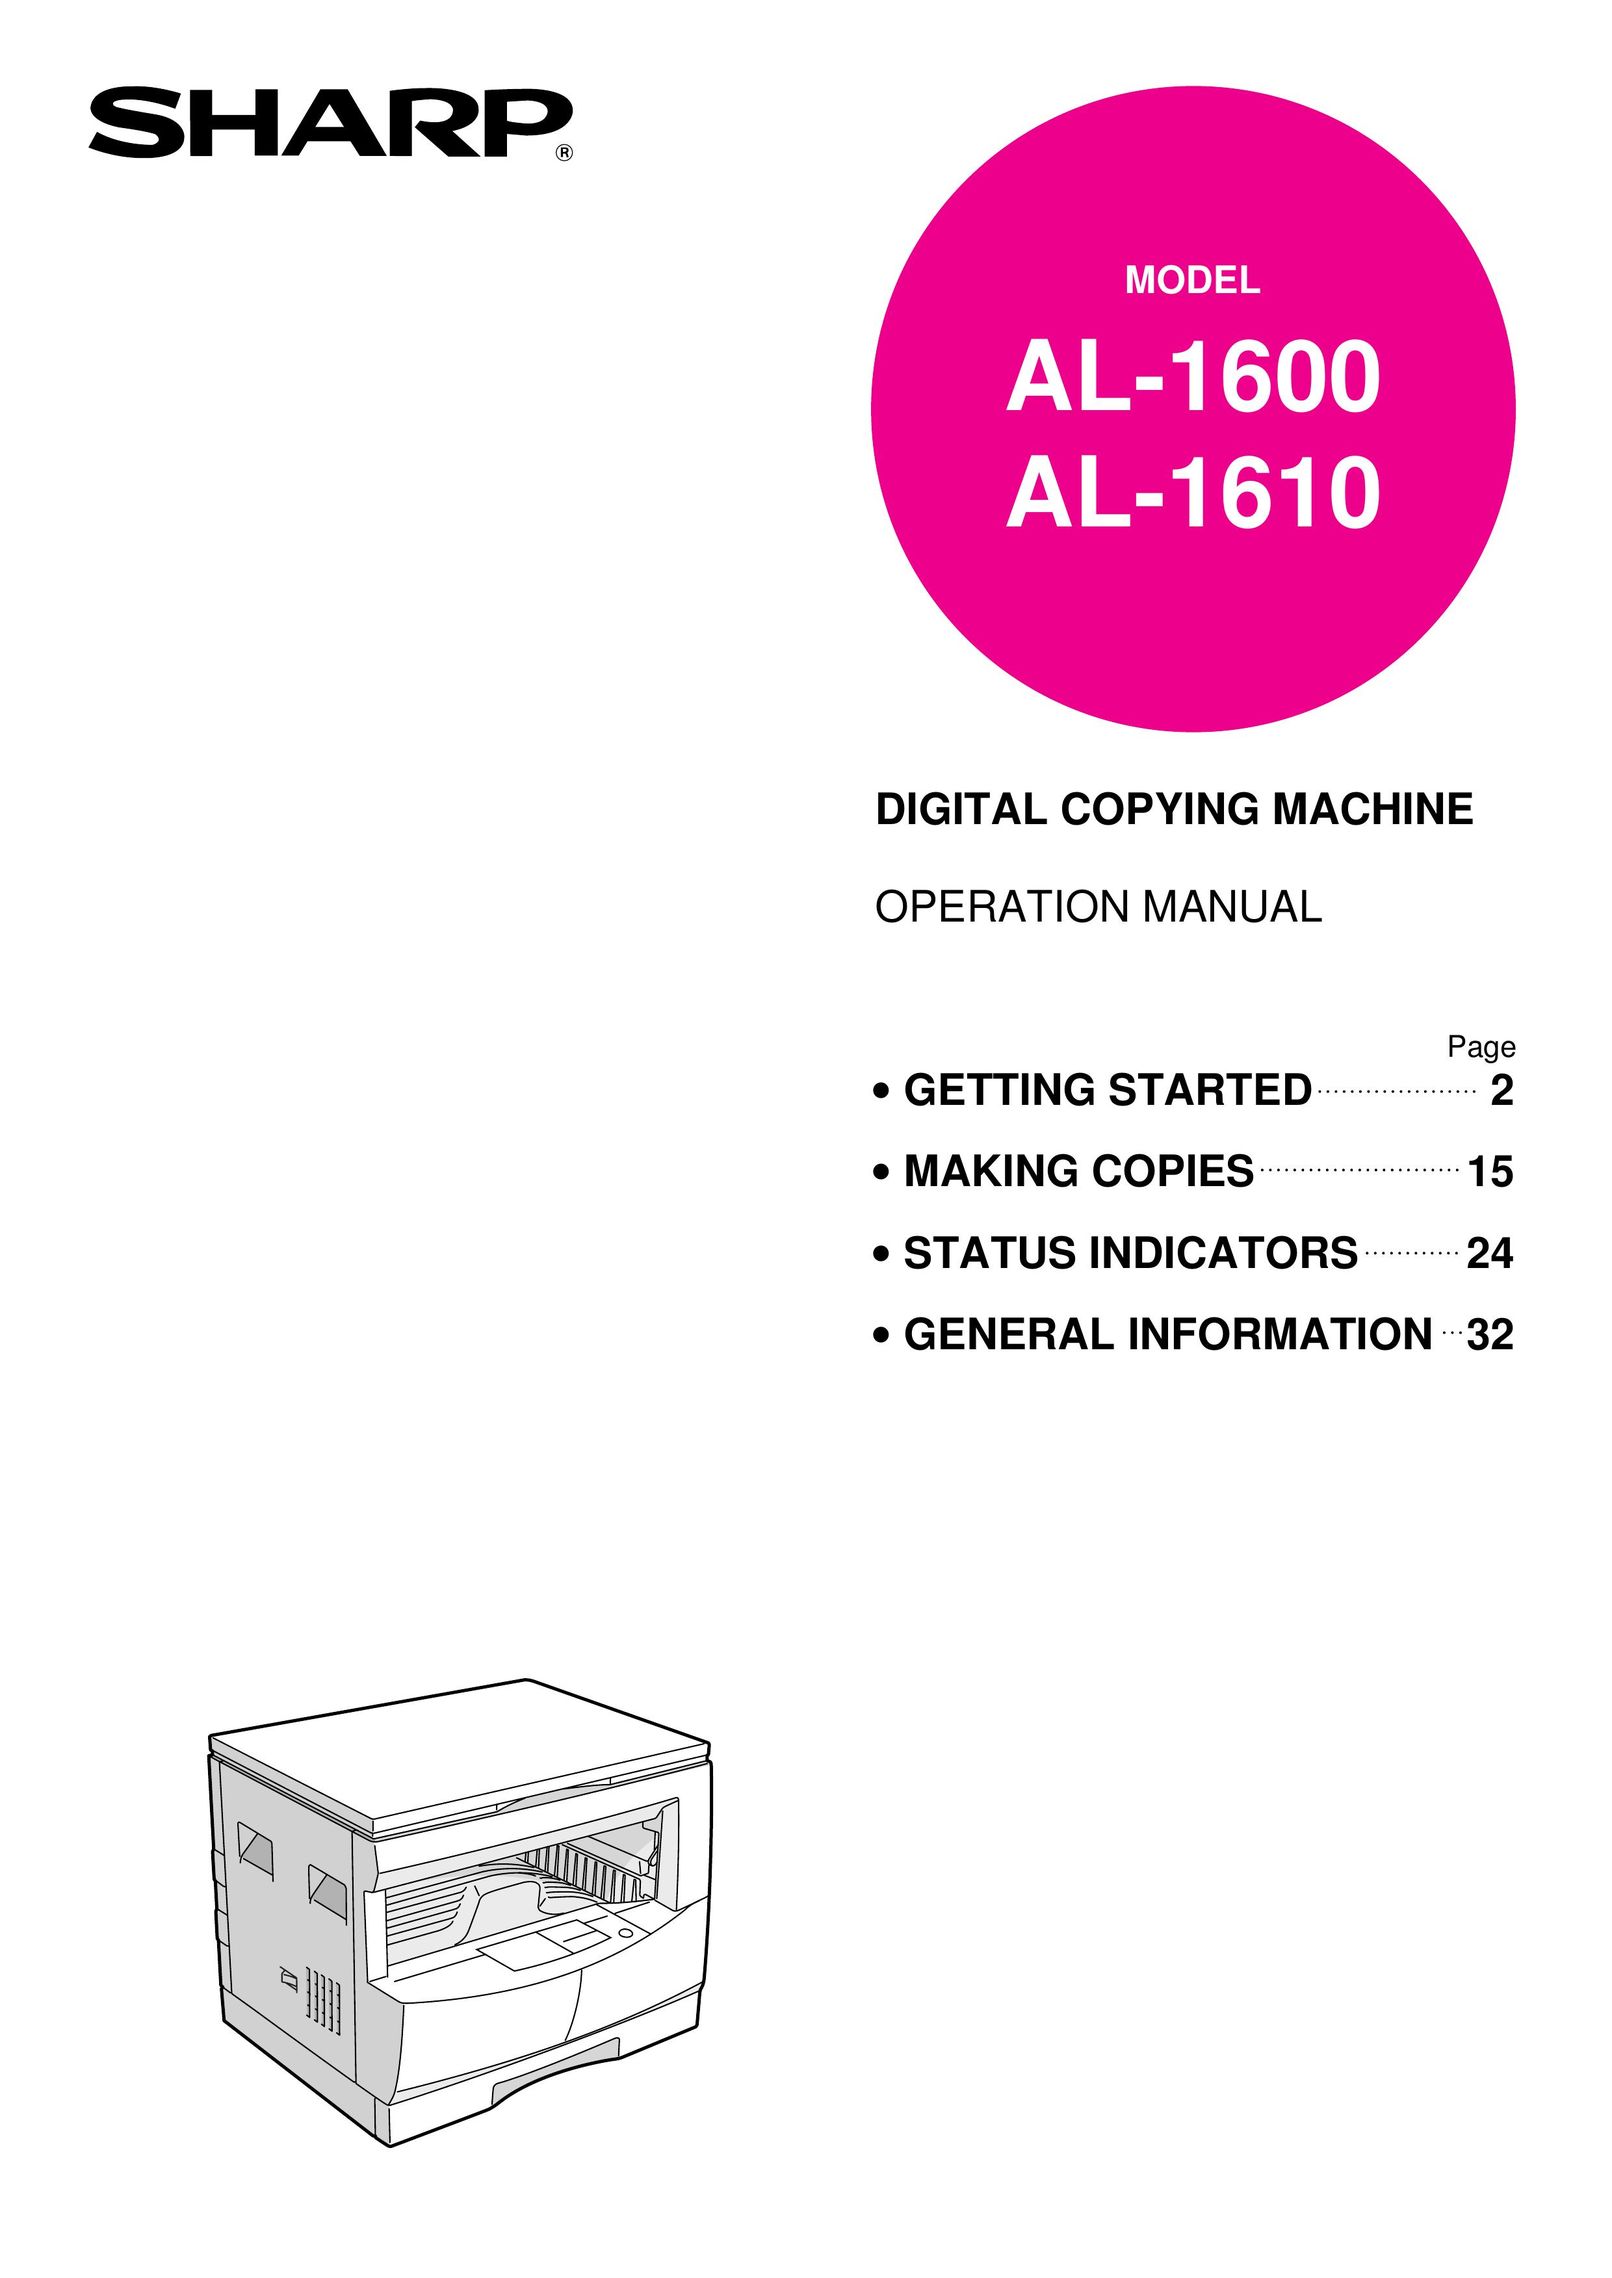 Sharp AL-1600 All in One Printer User Manual